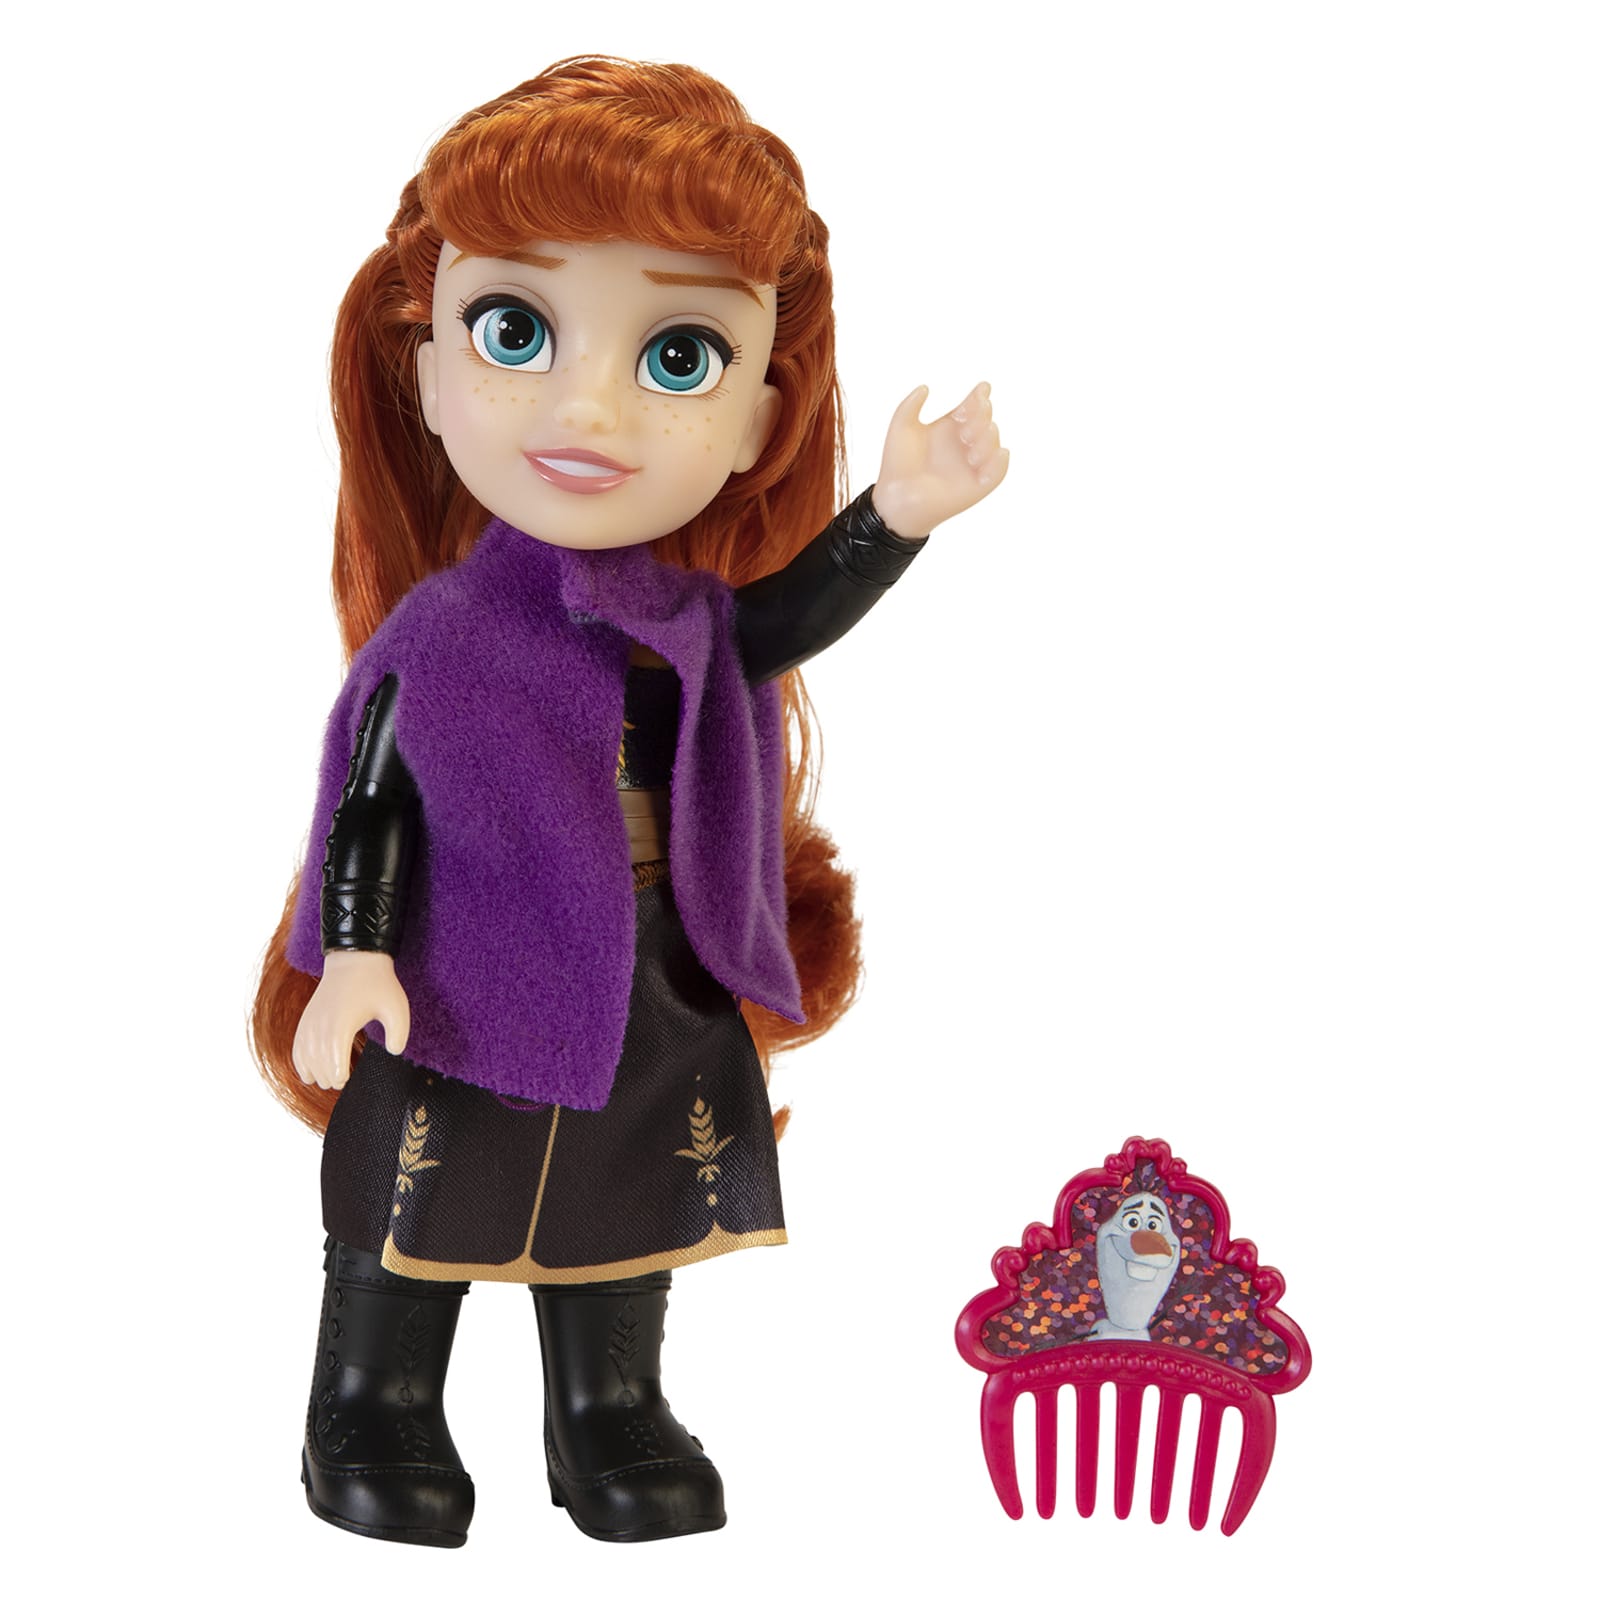 Frozen 2 Petite Adventure Elsa Doll & Petite Adventure Anna Doll - Assorted  by Disney at Fleet Farm